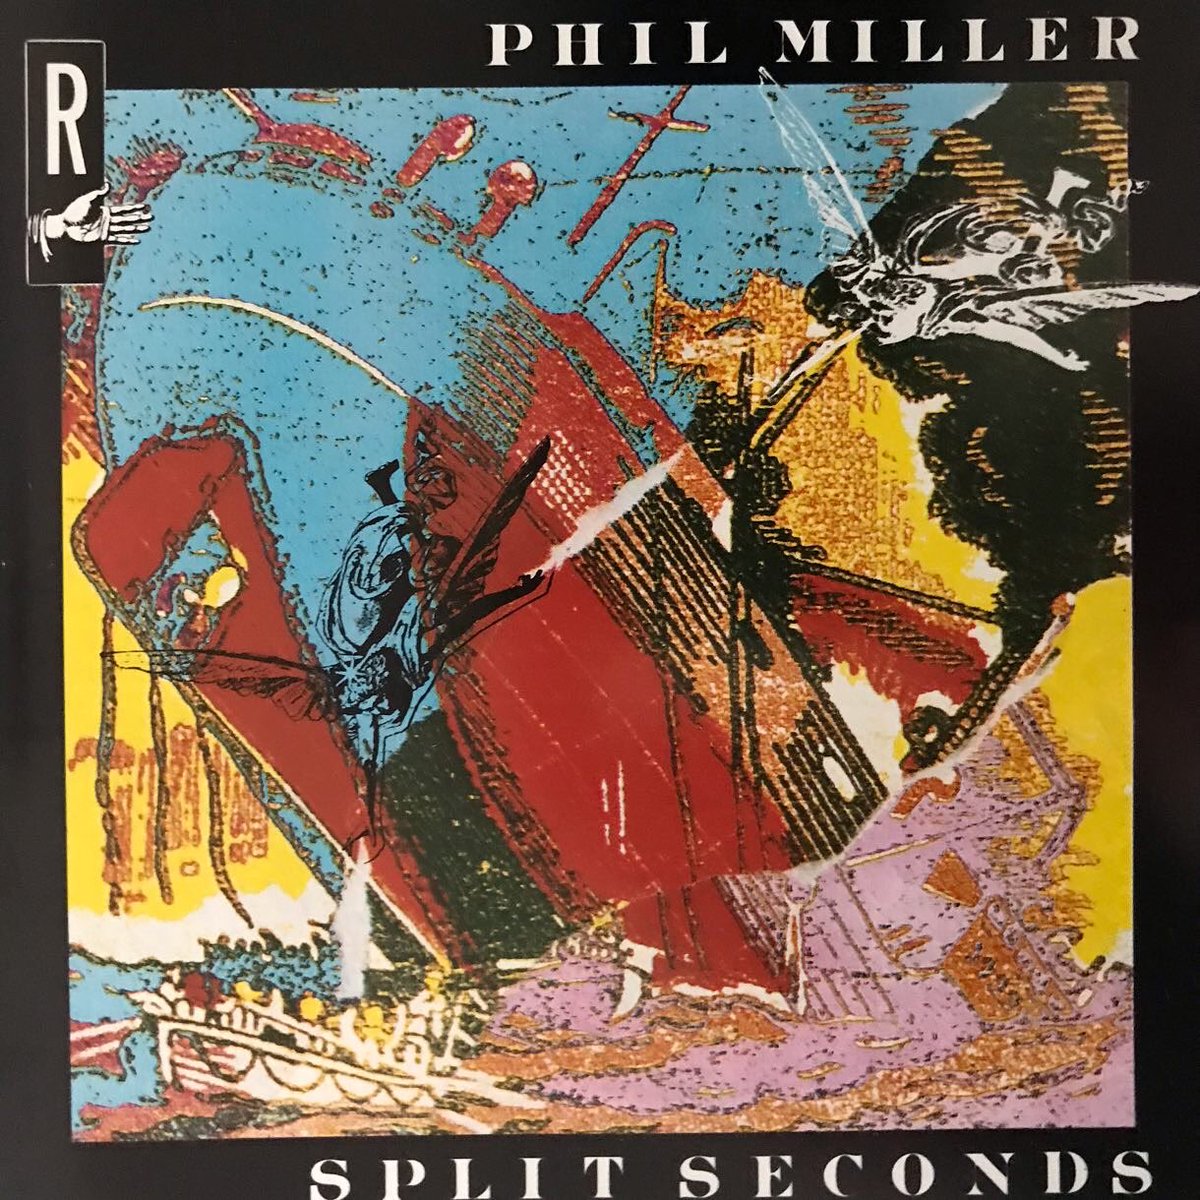 this Week's Recommend2️⃣PHIL MILLE
R Split Seconds 1988 #progrock #jazz 
#progressiverock #rock